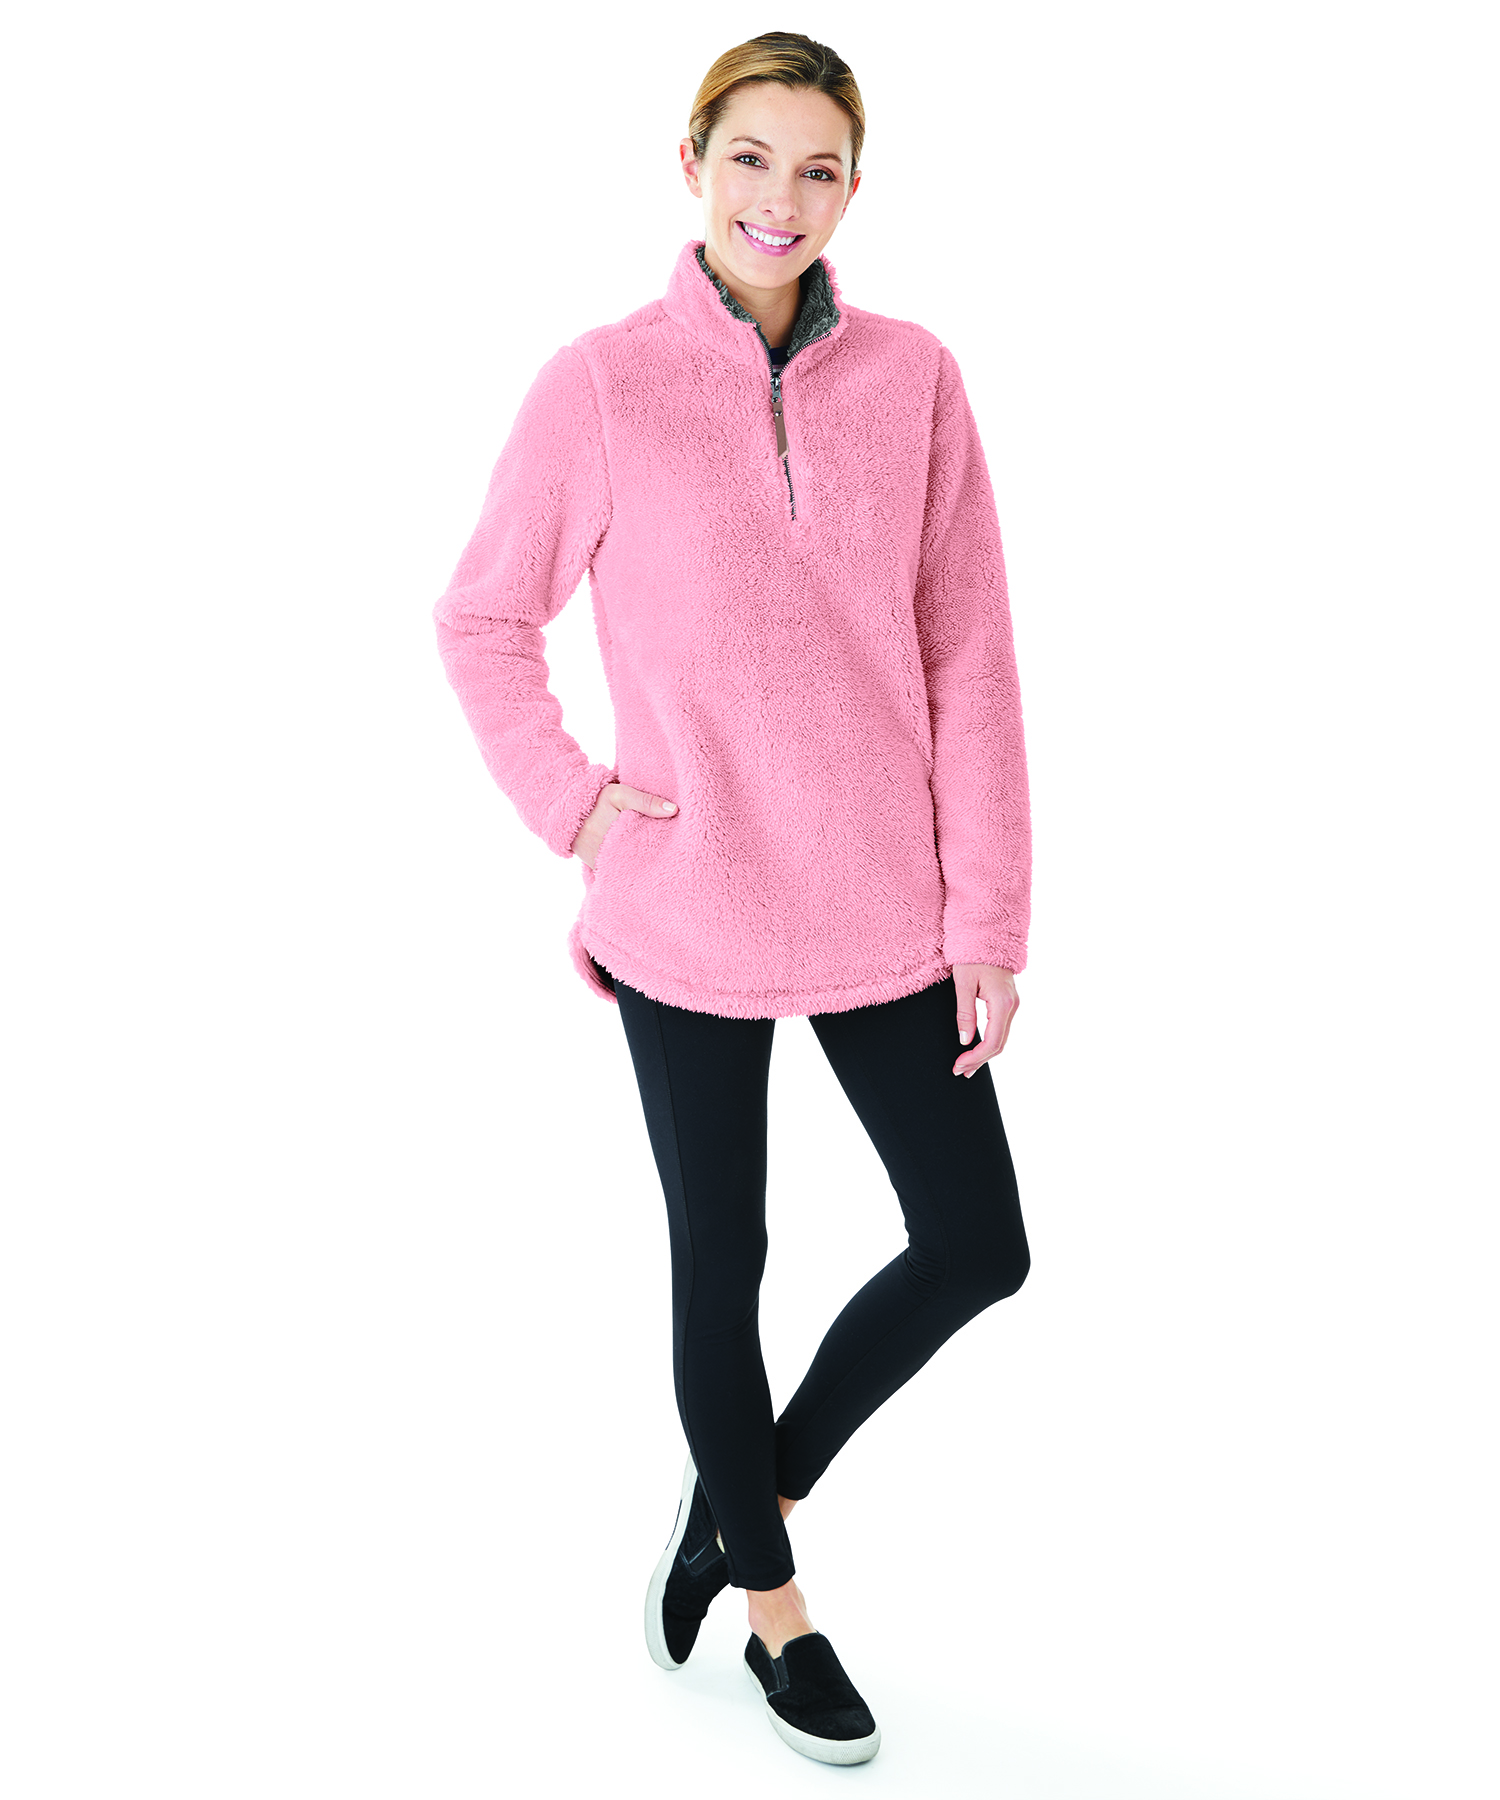 Charles River Apparel Women’s Newport Fleece Pullover Style 5876 Model Powder Pink